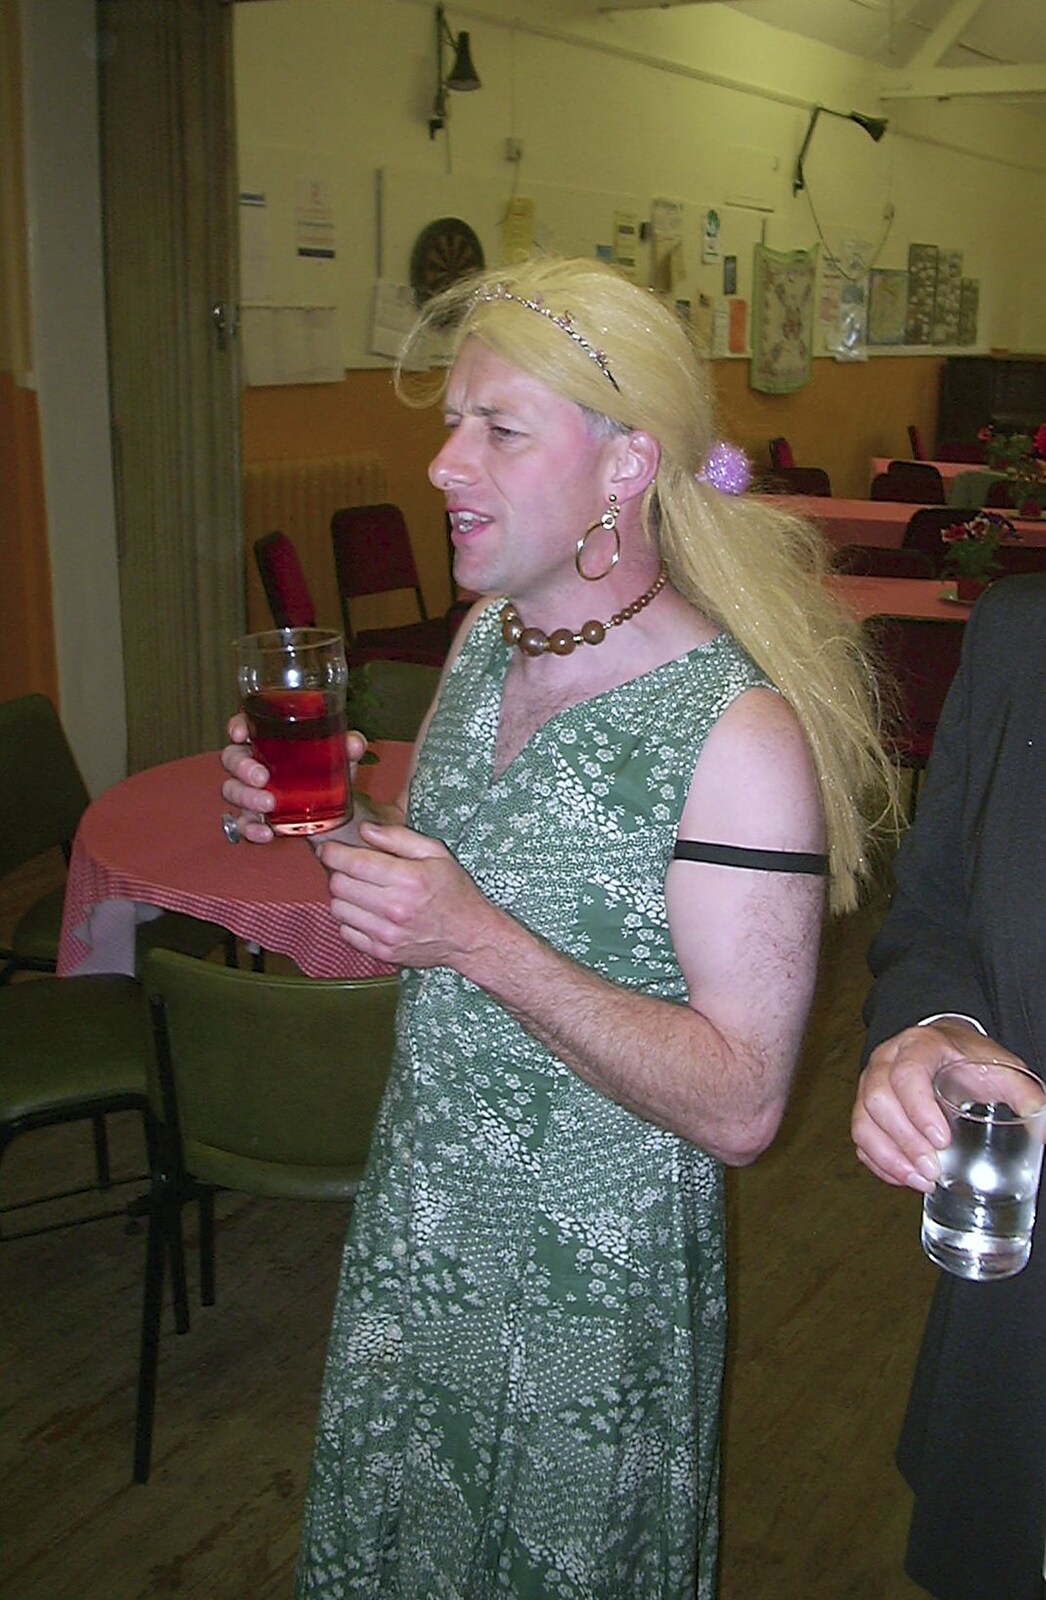 Fancy dress from Golden Jubilee Celebrations, The Village Hall, Brome, Suffolk - 4th June 2002